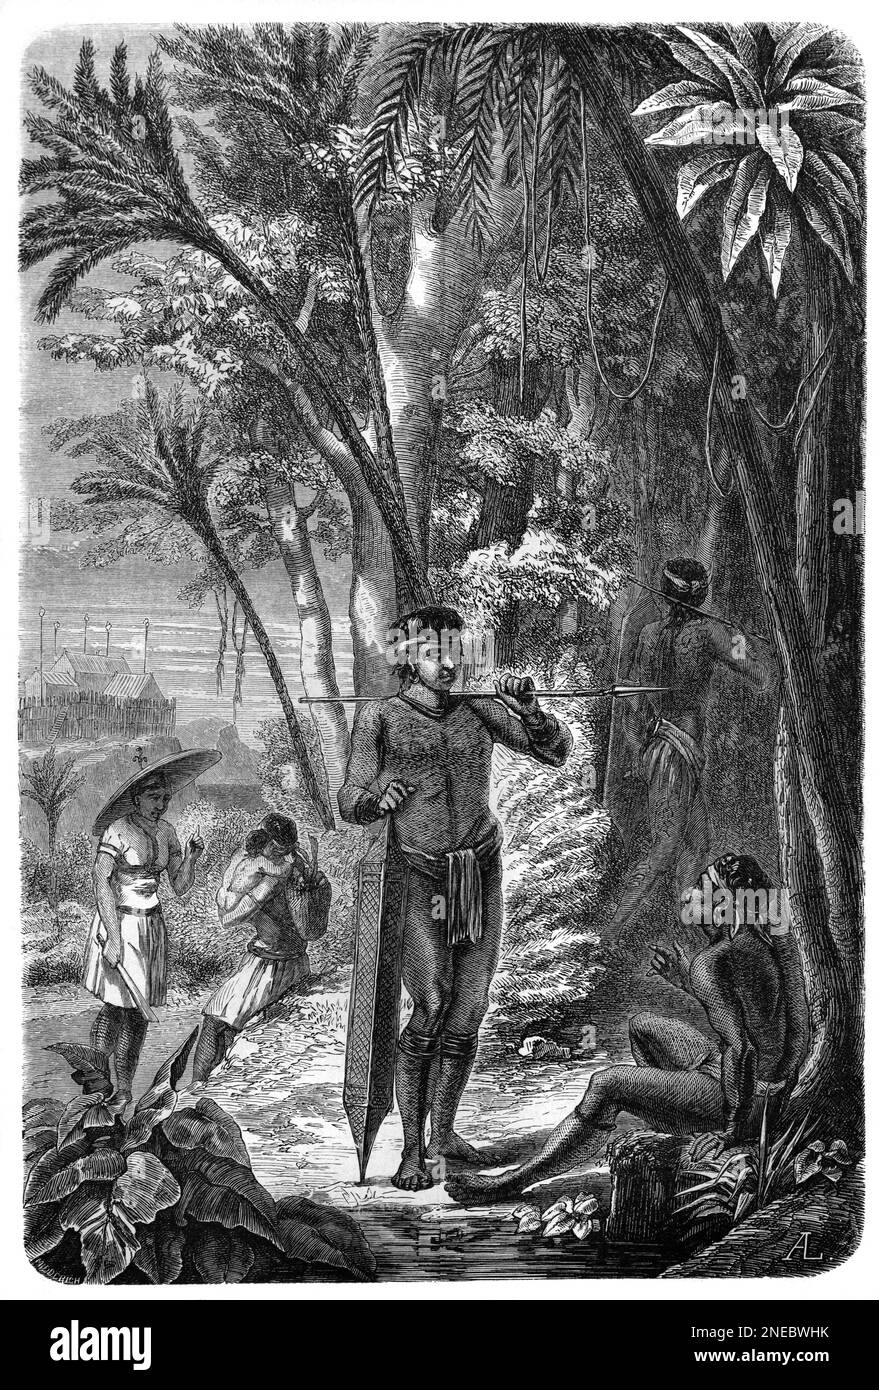 Dayaks in Tribal Dress including Male Hunter or Hunters, Women & Children in the Rain Forest Borner. Vintage Engravin or Illustraton 1862 Stock Photo